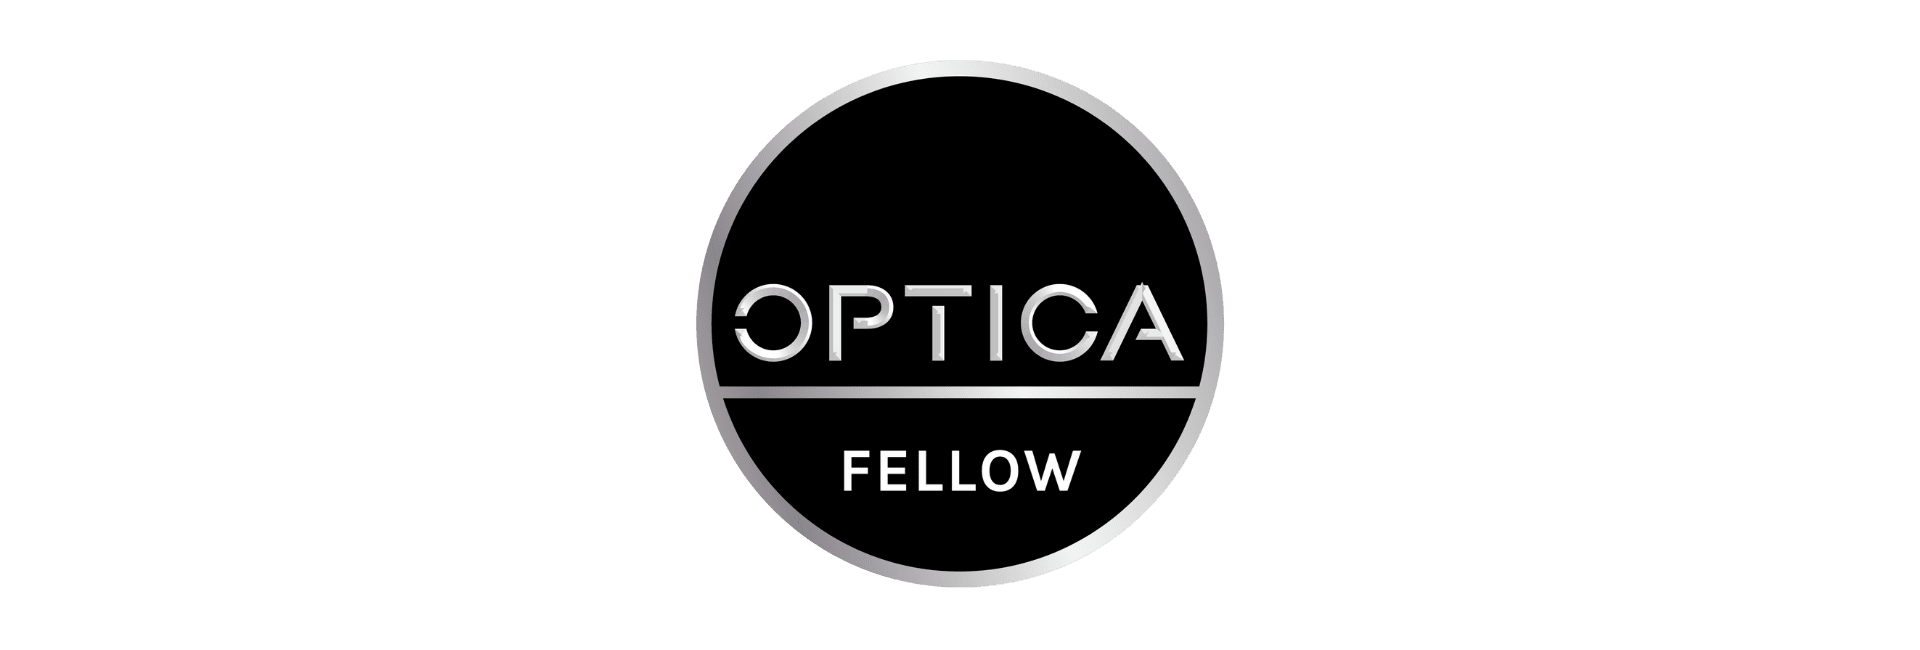 Optica Fellow Badge